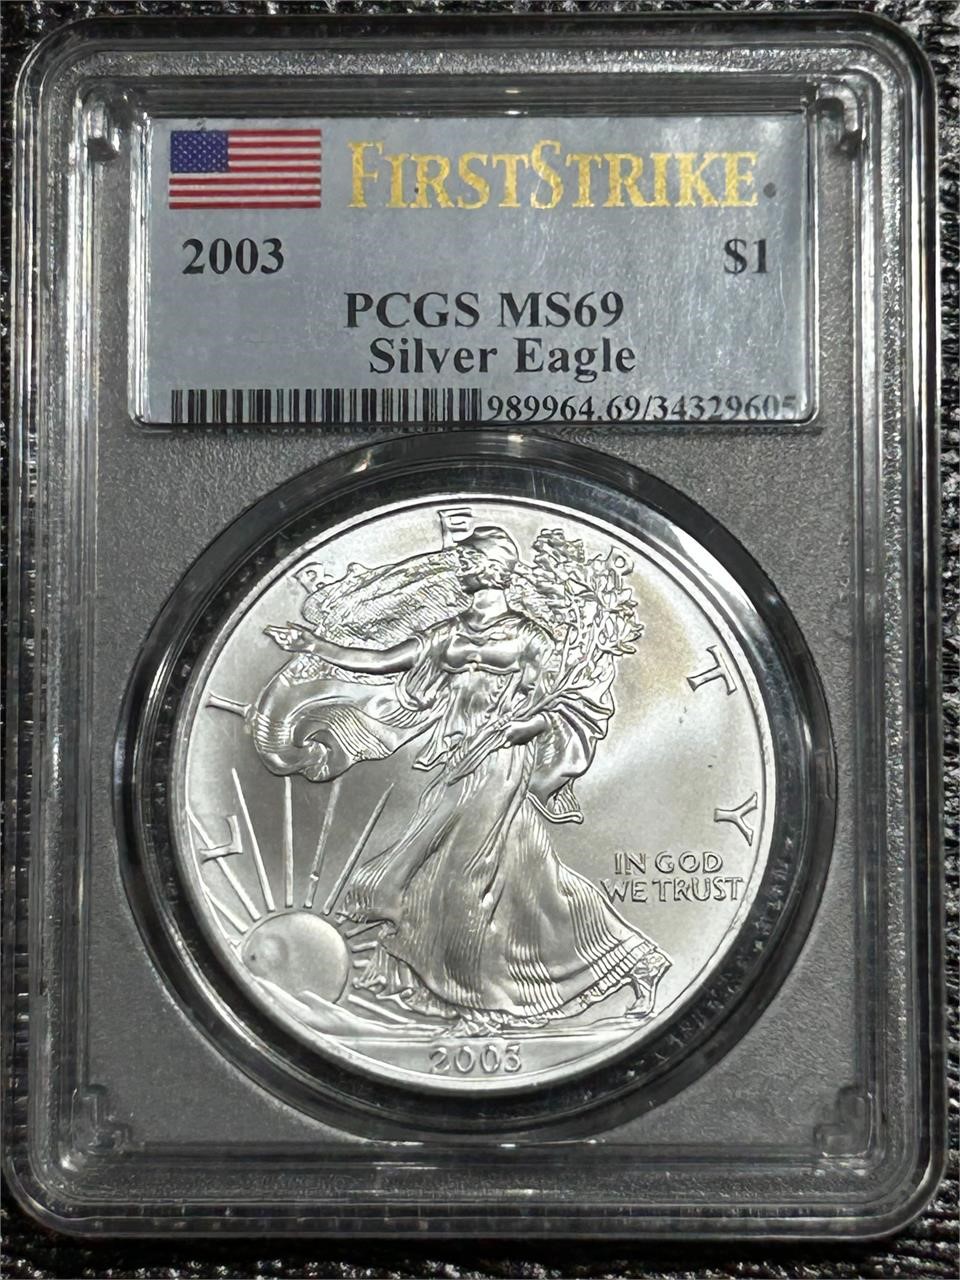 U.S. 2003 Silver Eagle "First Strike" MS69 PCGS